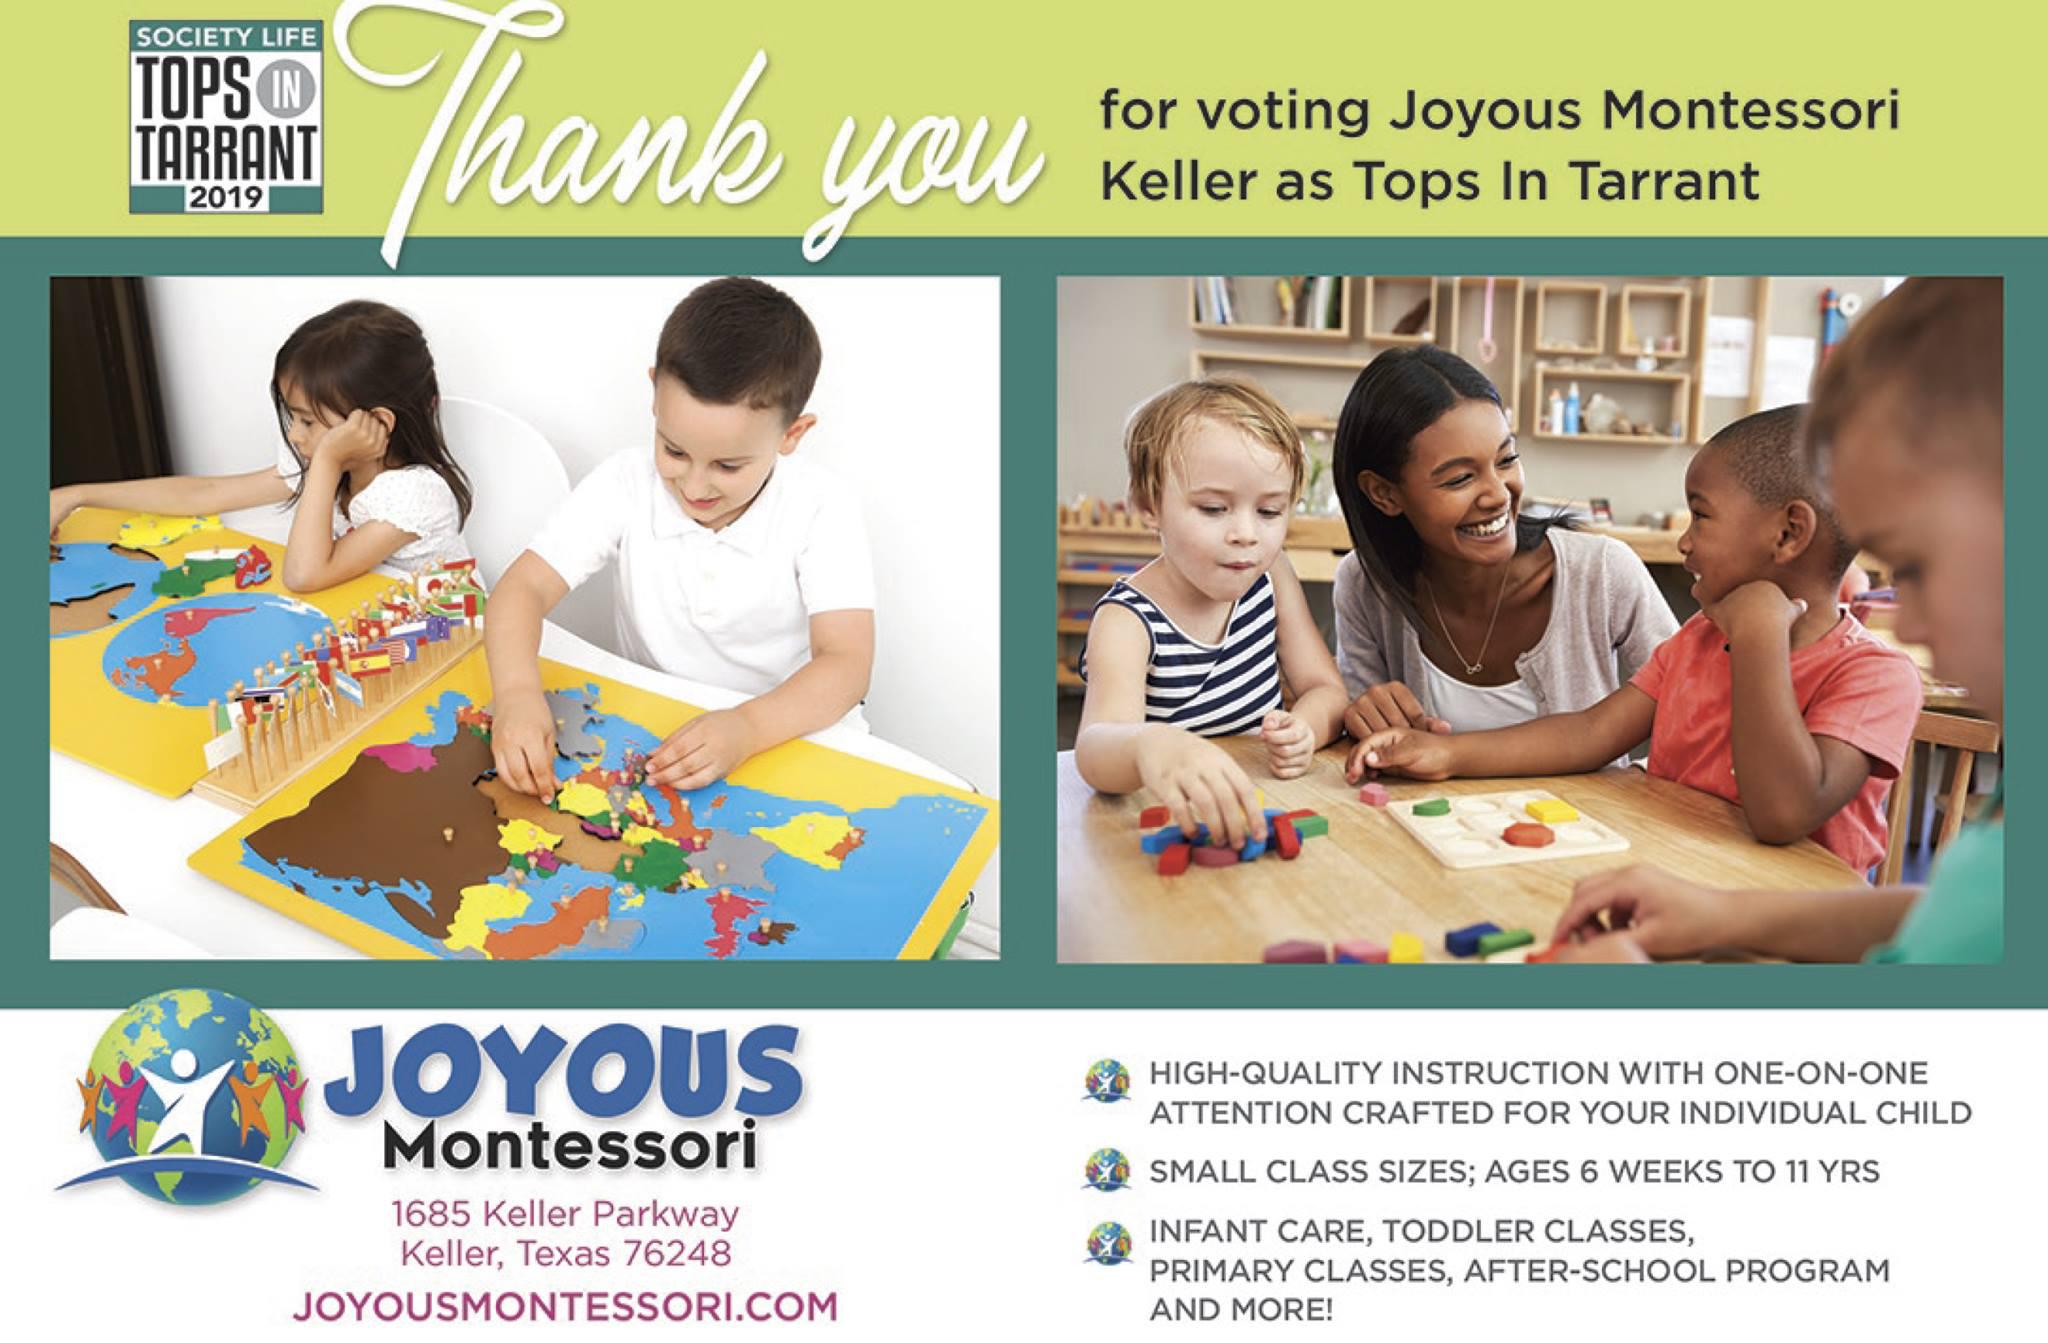 Joyous Montessori Keller voted Tops in Tarrant county